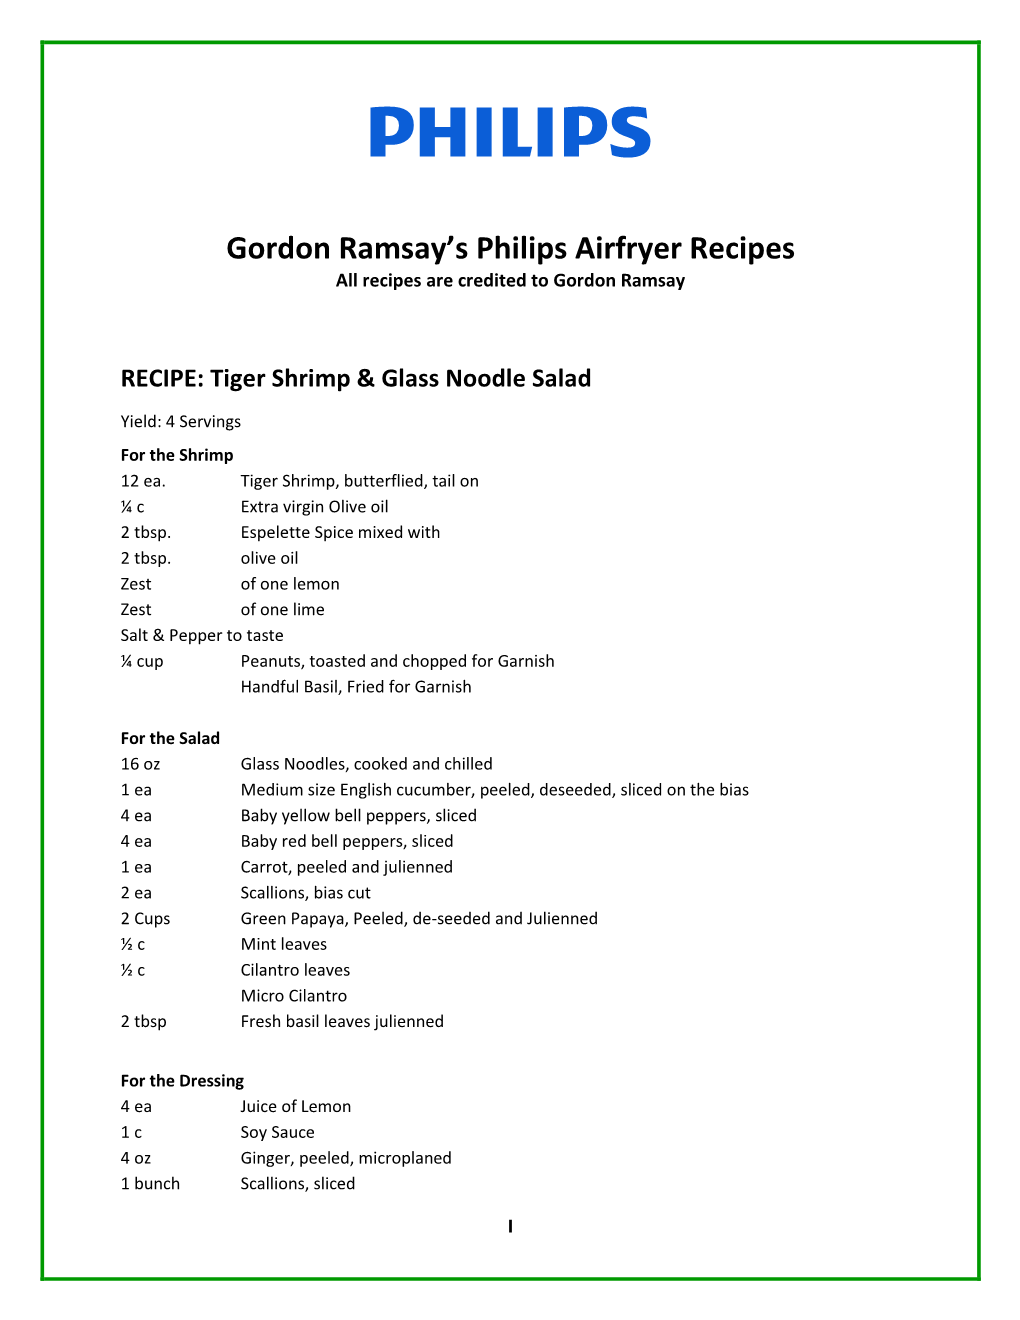 Gordon Ramsay's Philips Airfryer Recipes